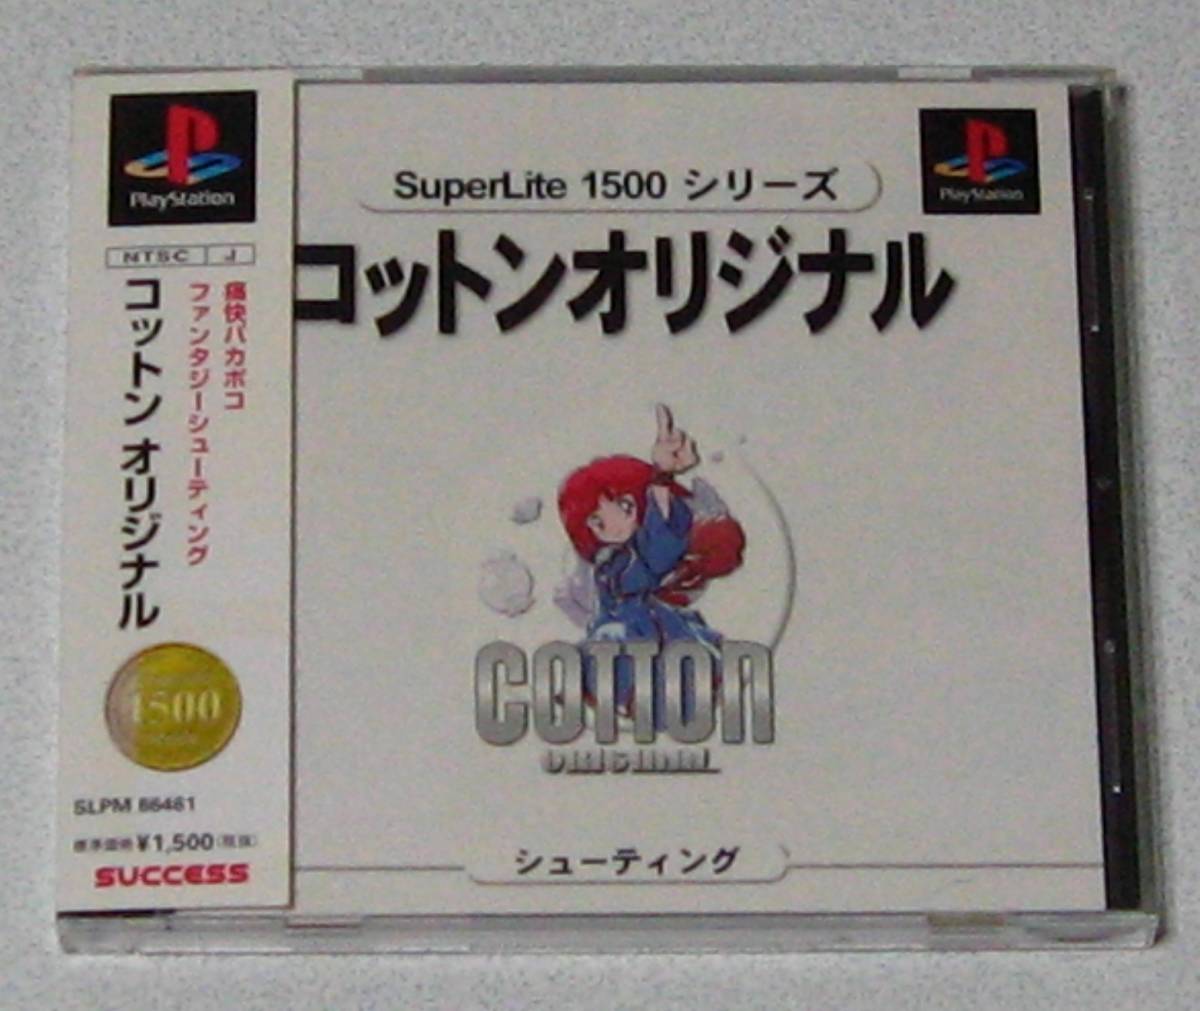 PS コットン オリジナル SuperLite 1500 シリーズ ☆ club51.mx